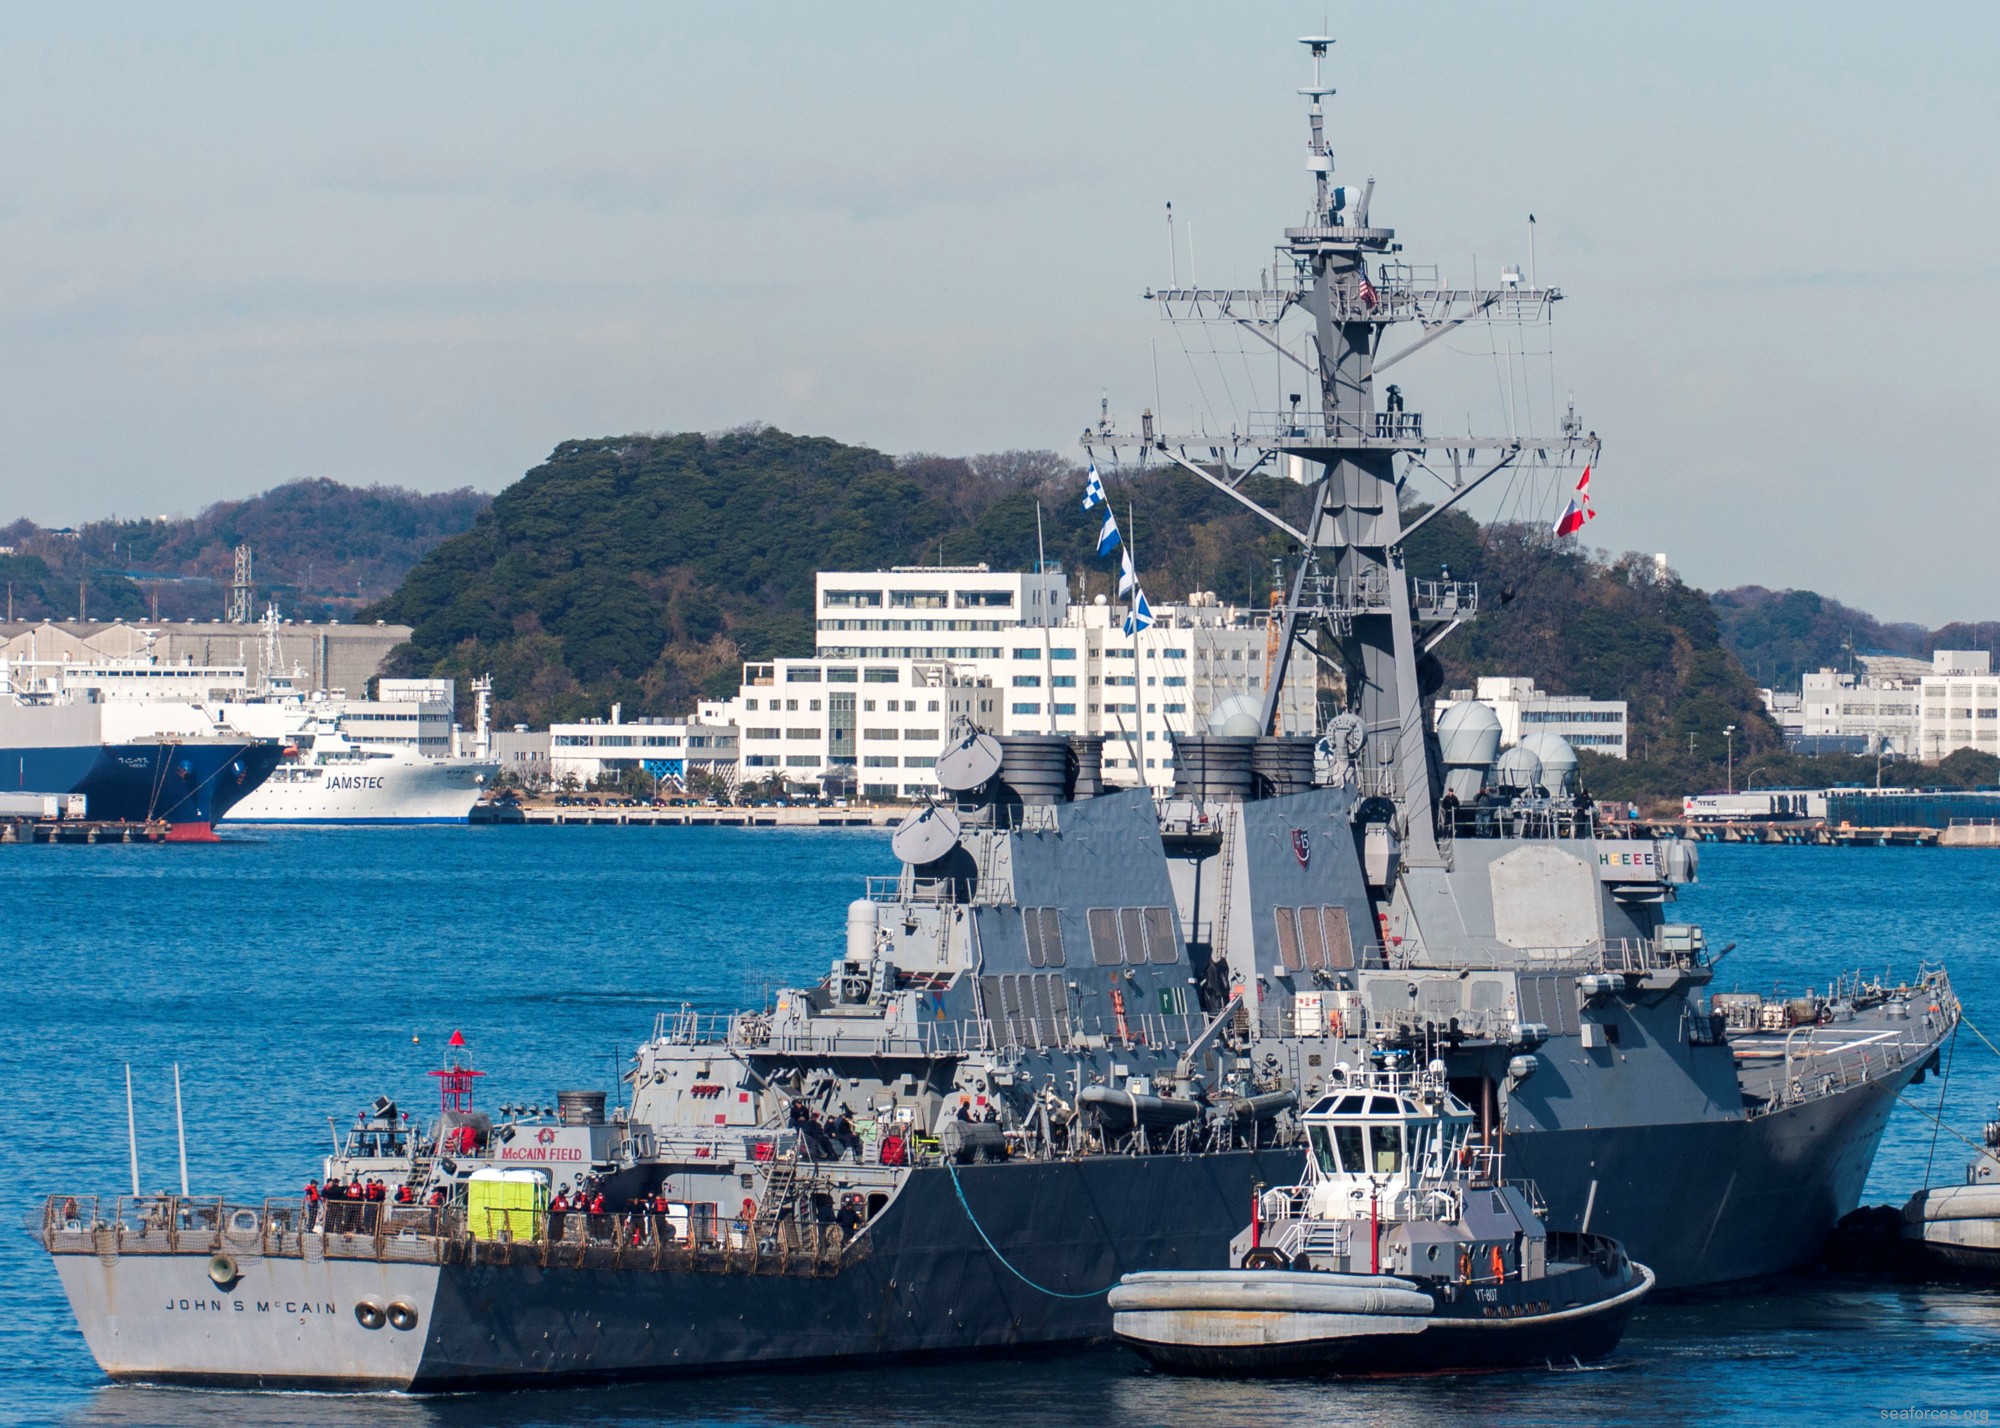 ddg-56 uss john s. mccain destroyer us navy 113 fleet activities yokosuka japan repairs after collision